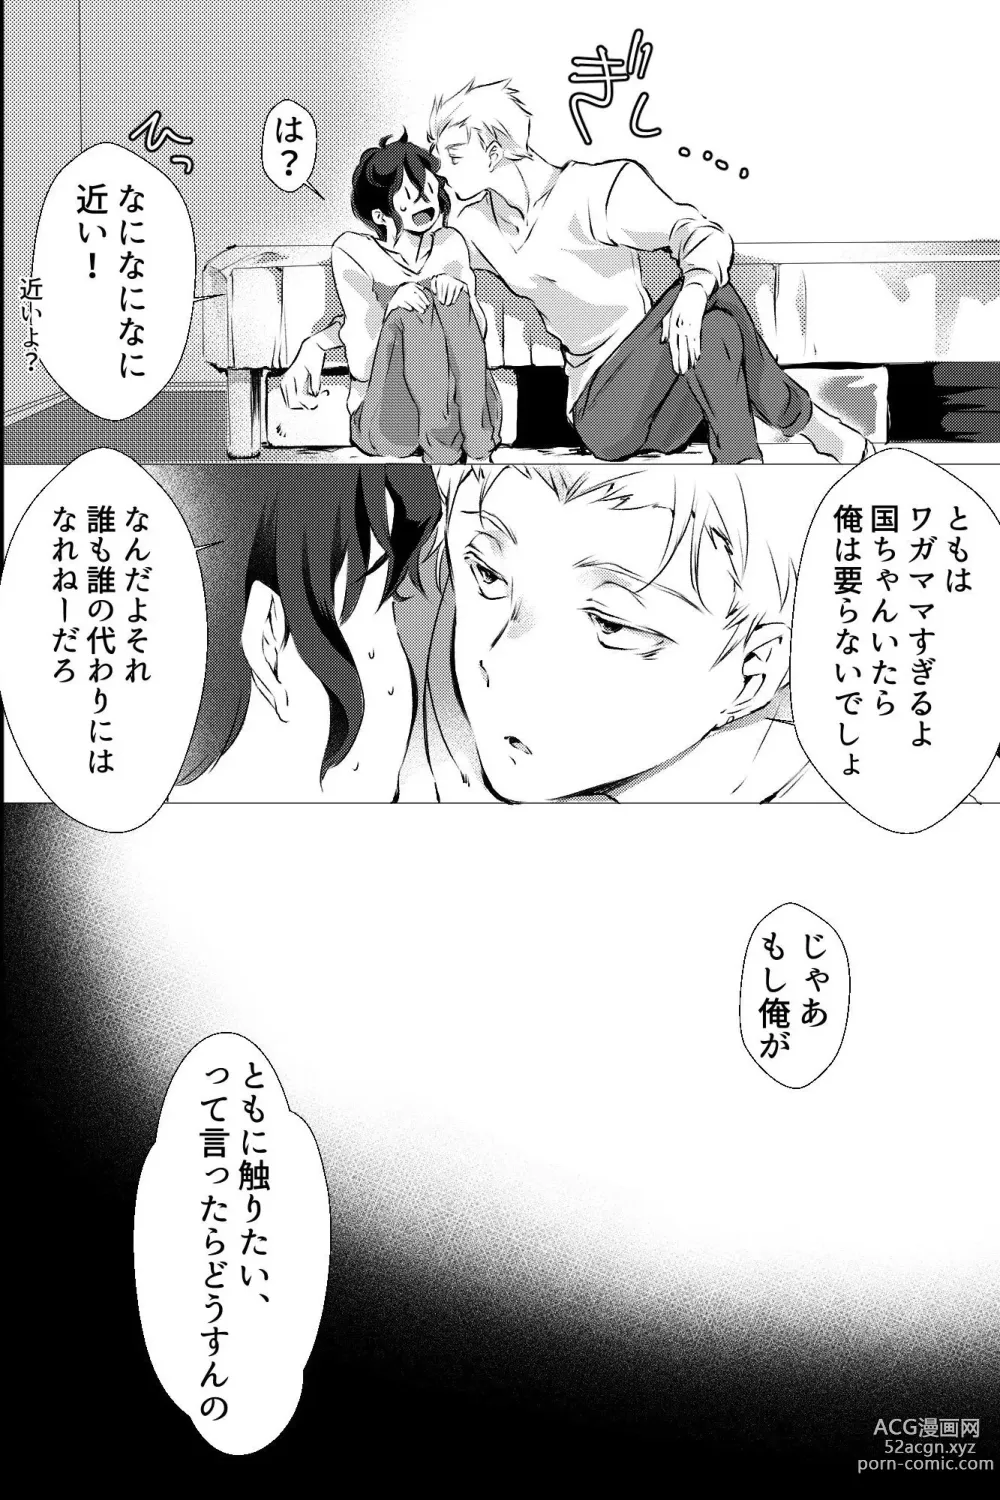 Page 13 of doujinshi 俺しか知らない親友のカオ。媚薬を親友に盛られたら